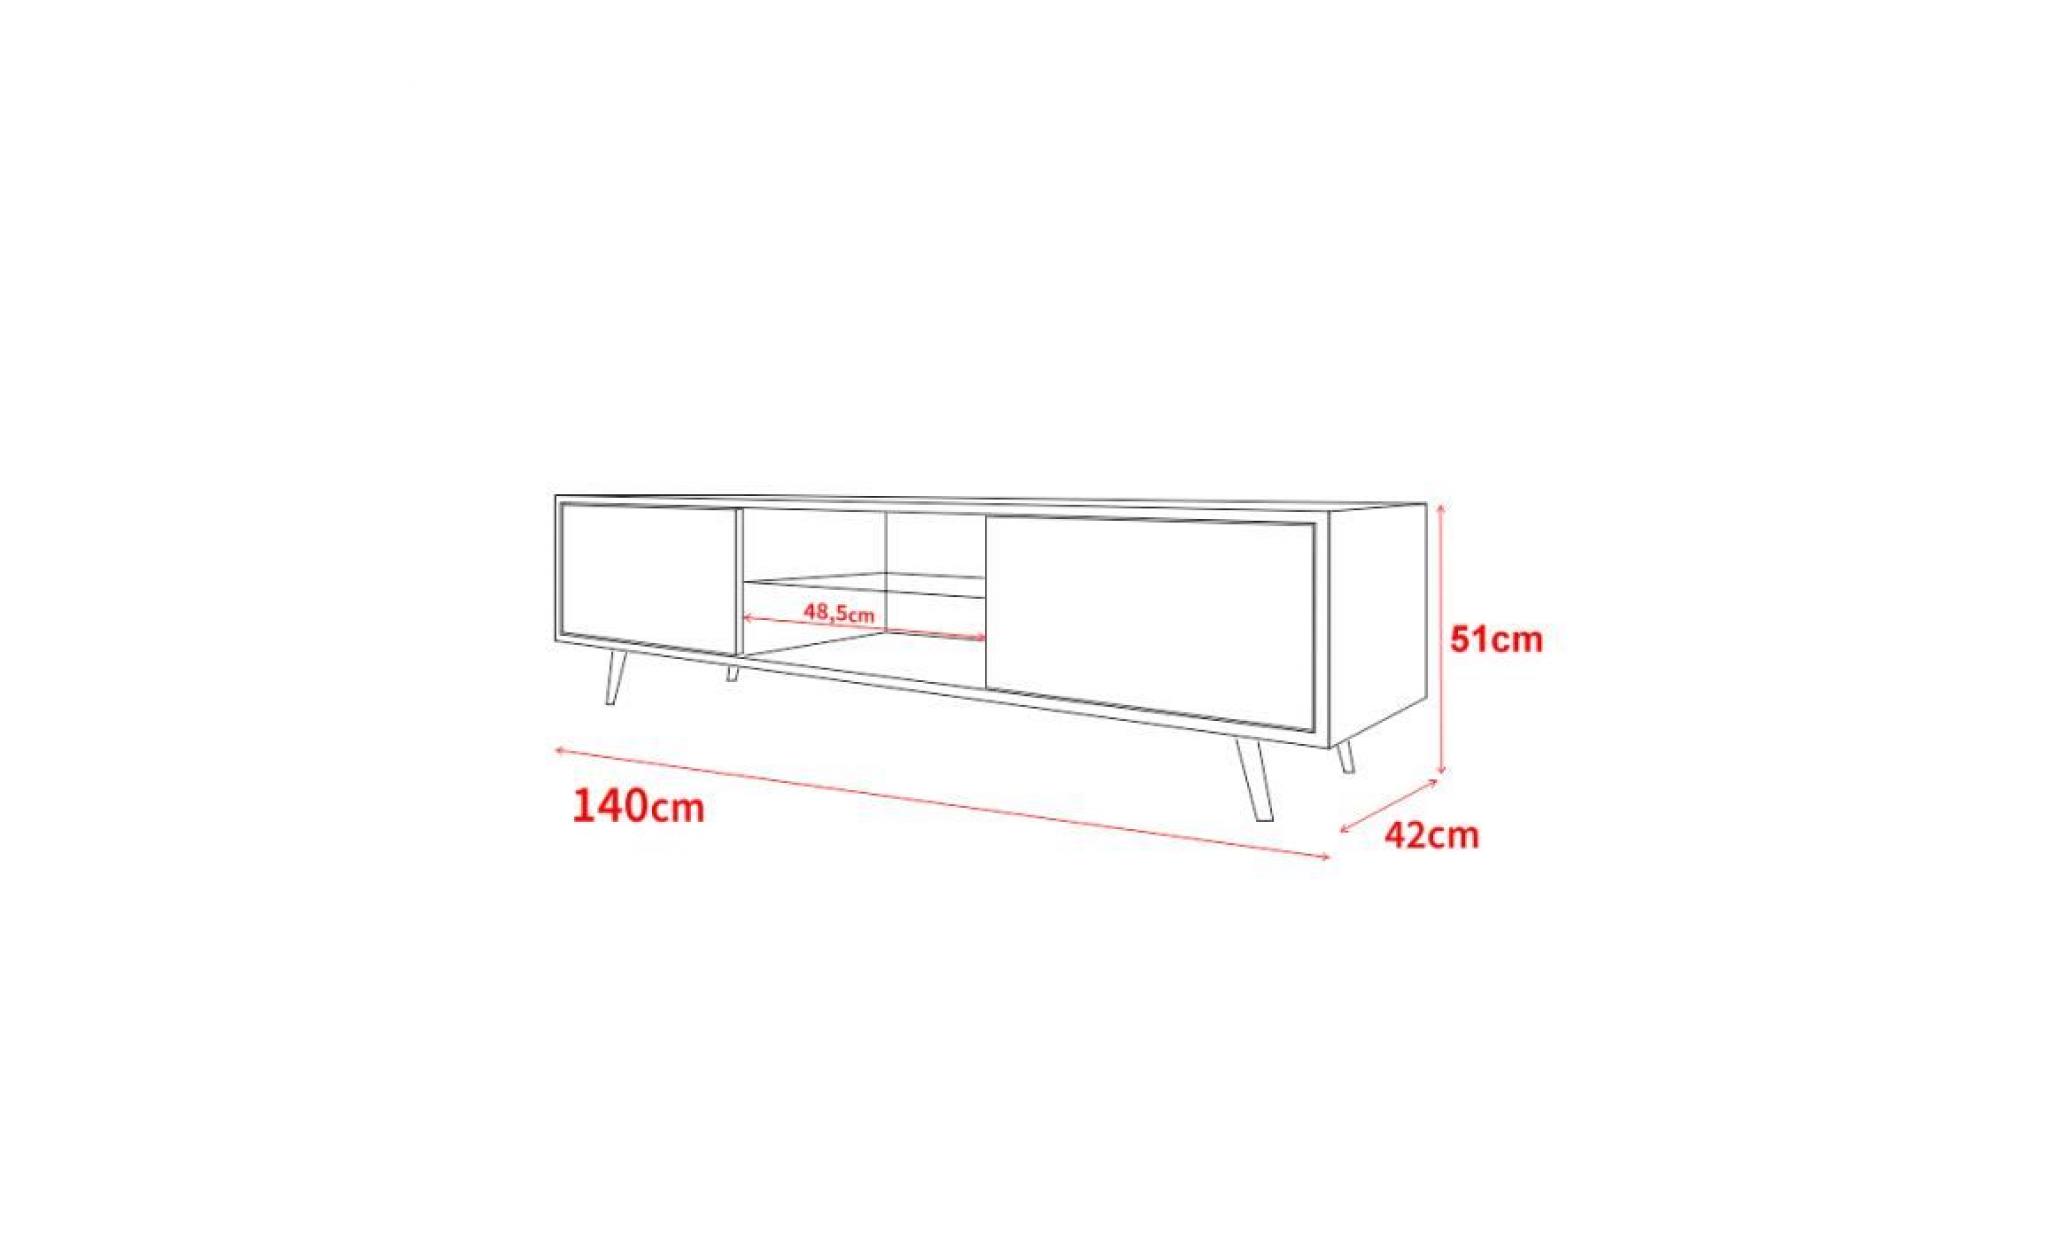 meuble tv / meuble de salon   rivano ii   140 cm   blanc mat / blanc brillant   style scandinave   style minimaliste pas cher